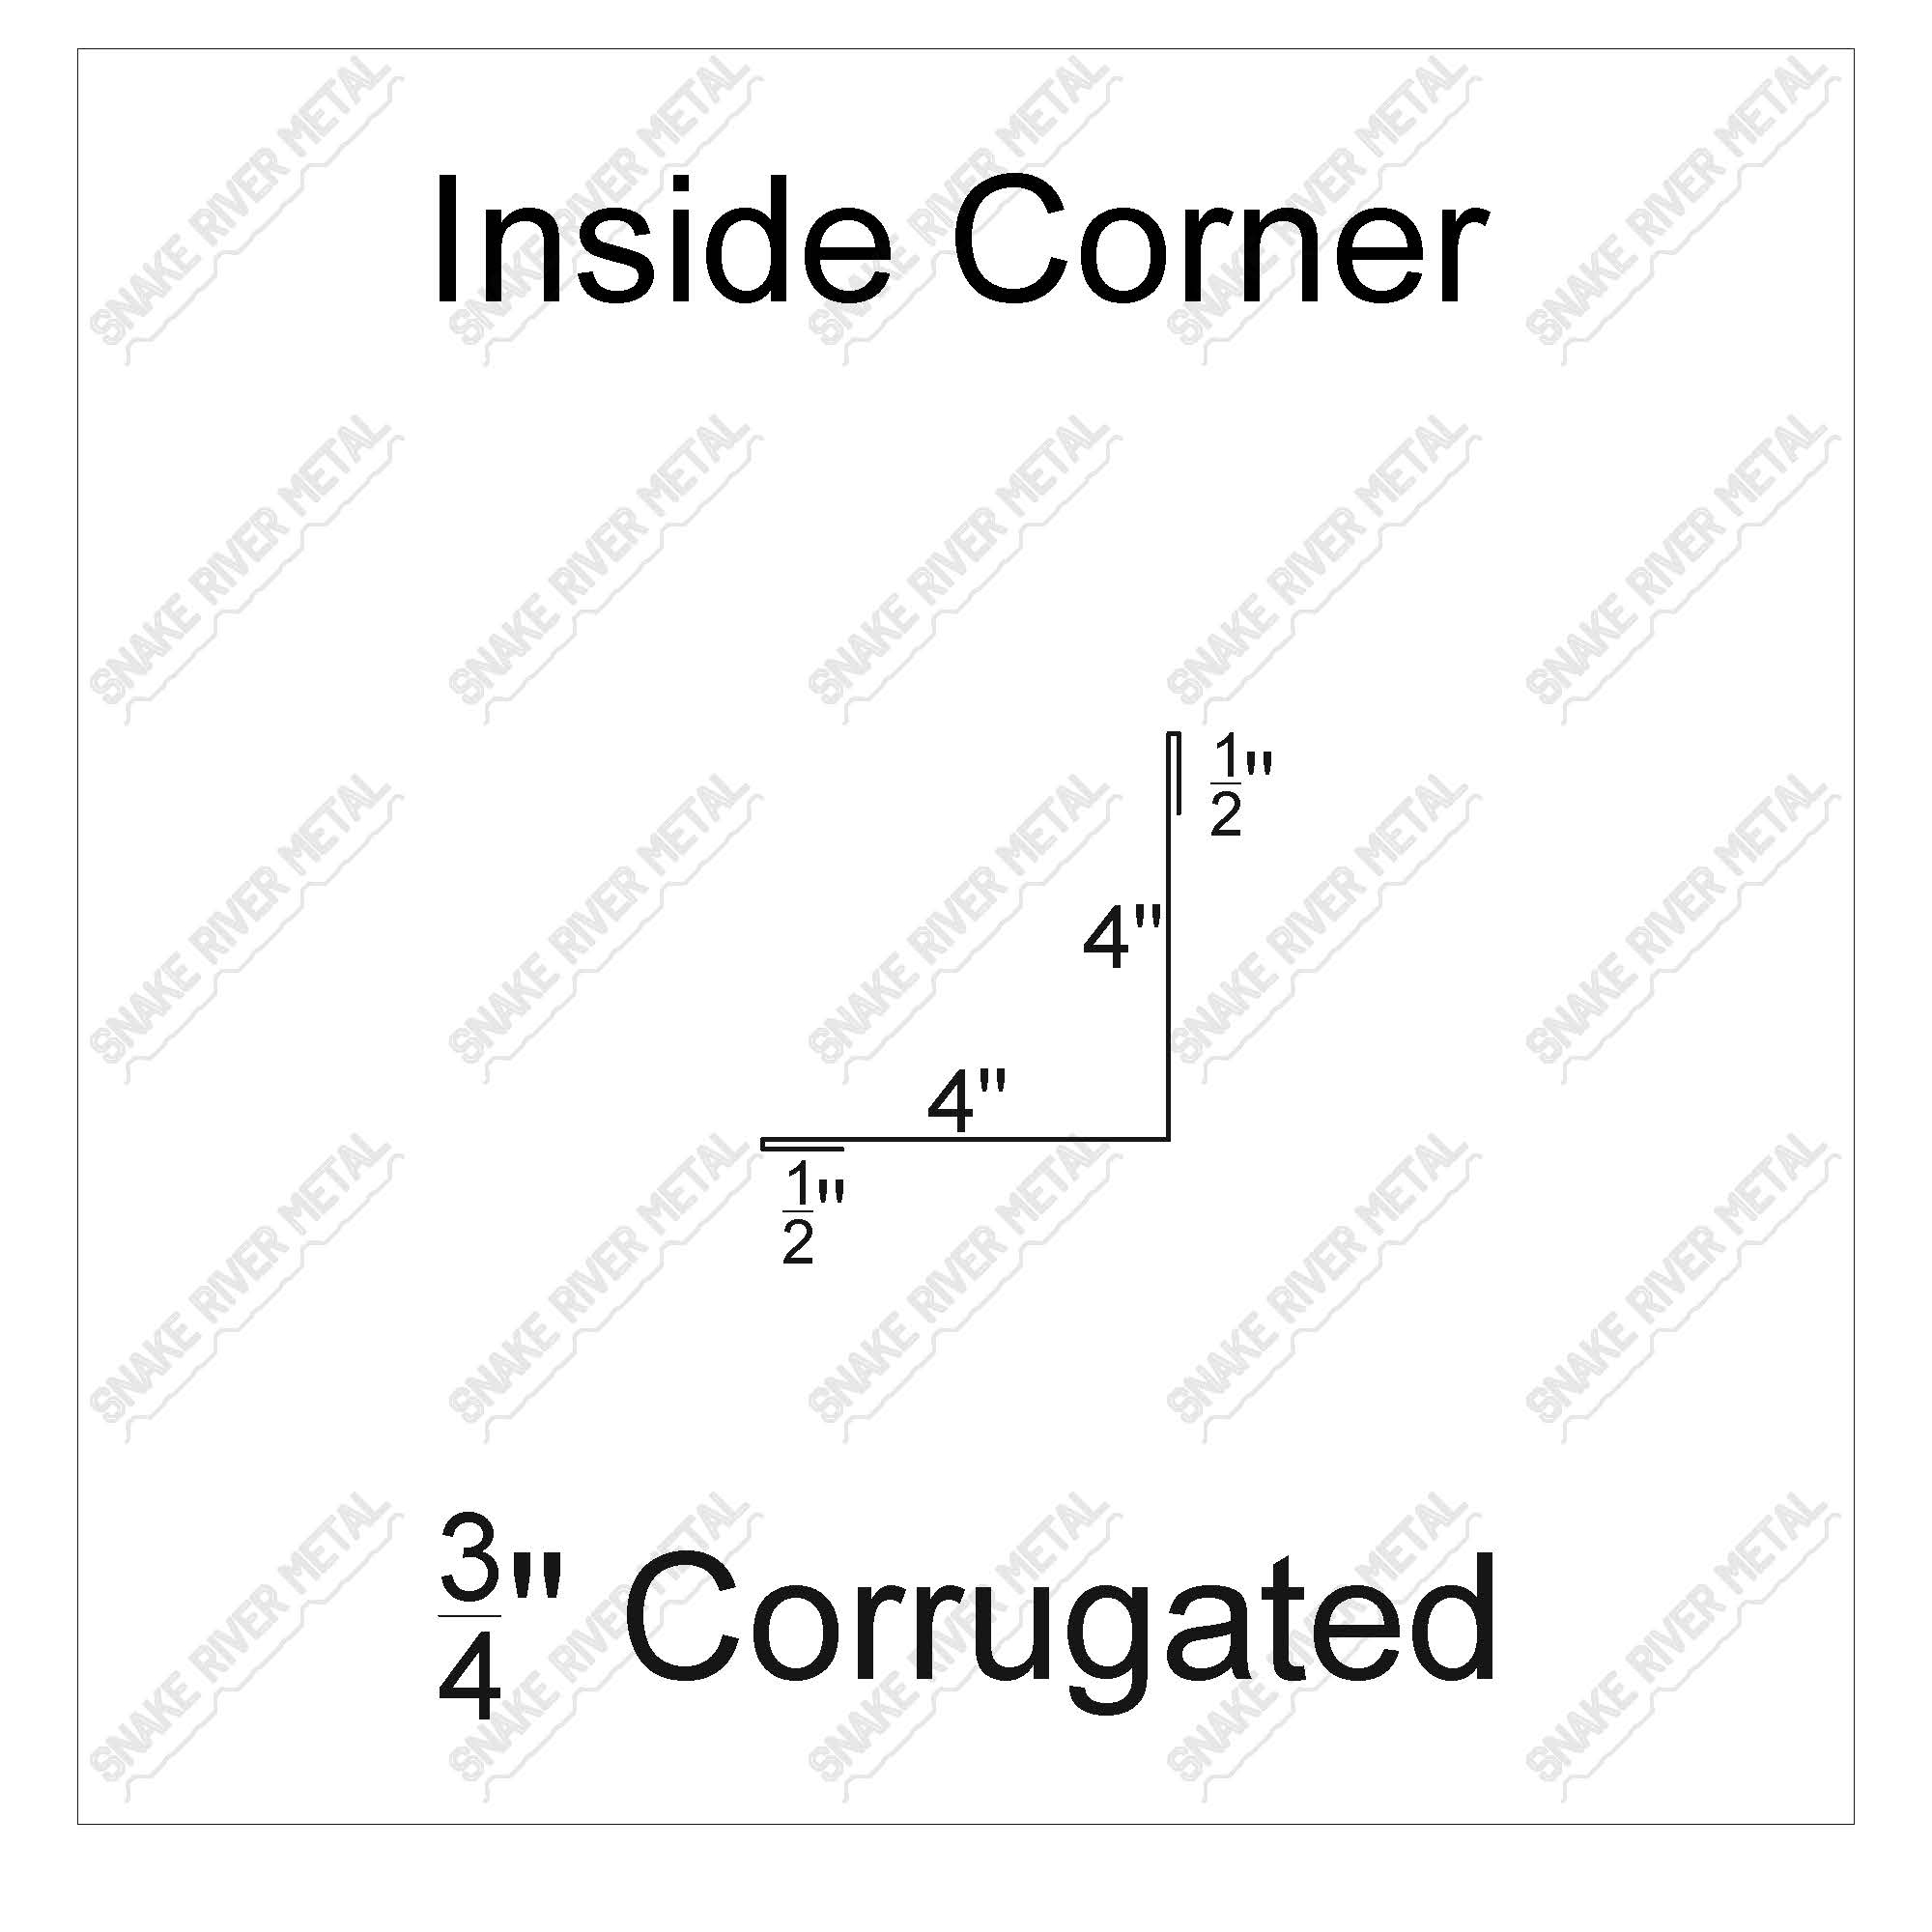 Inside Corner - Corrugated Trim